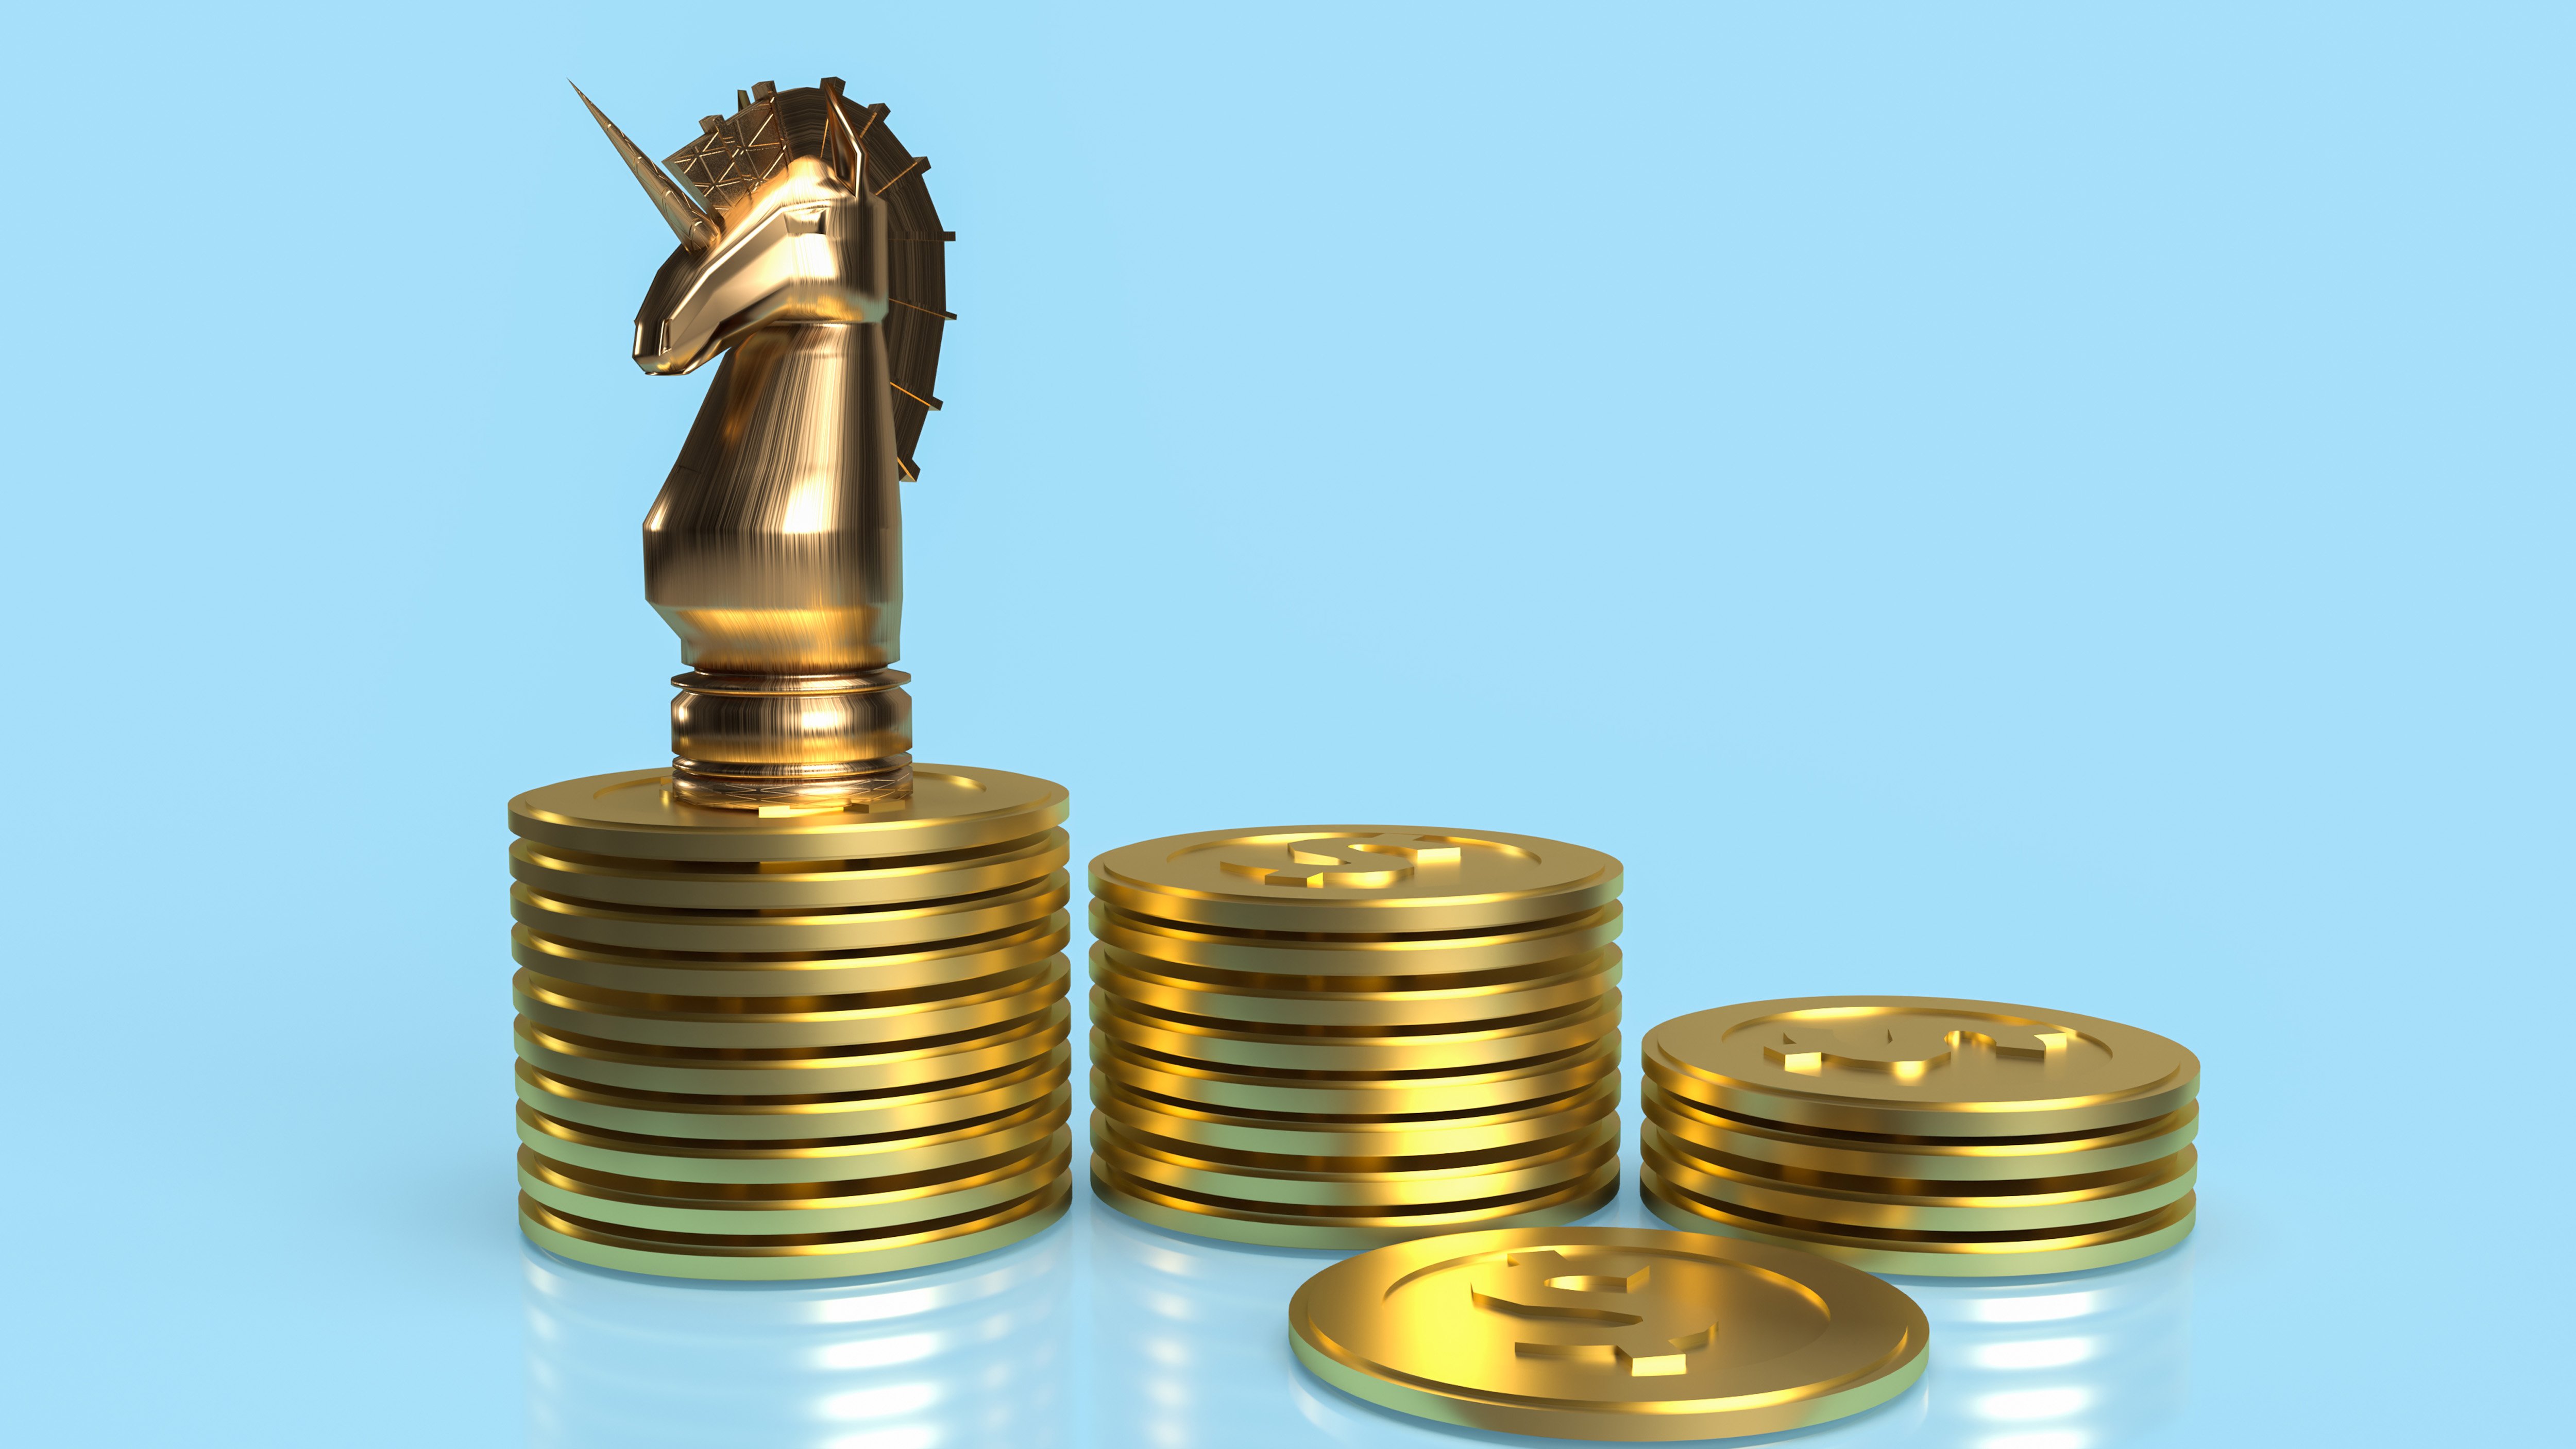 unicorn fundraise cash money coins financing